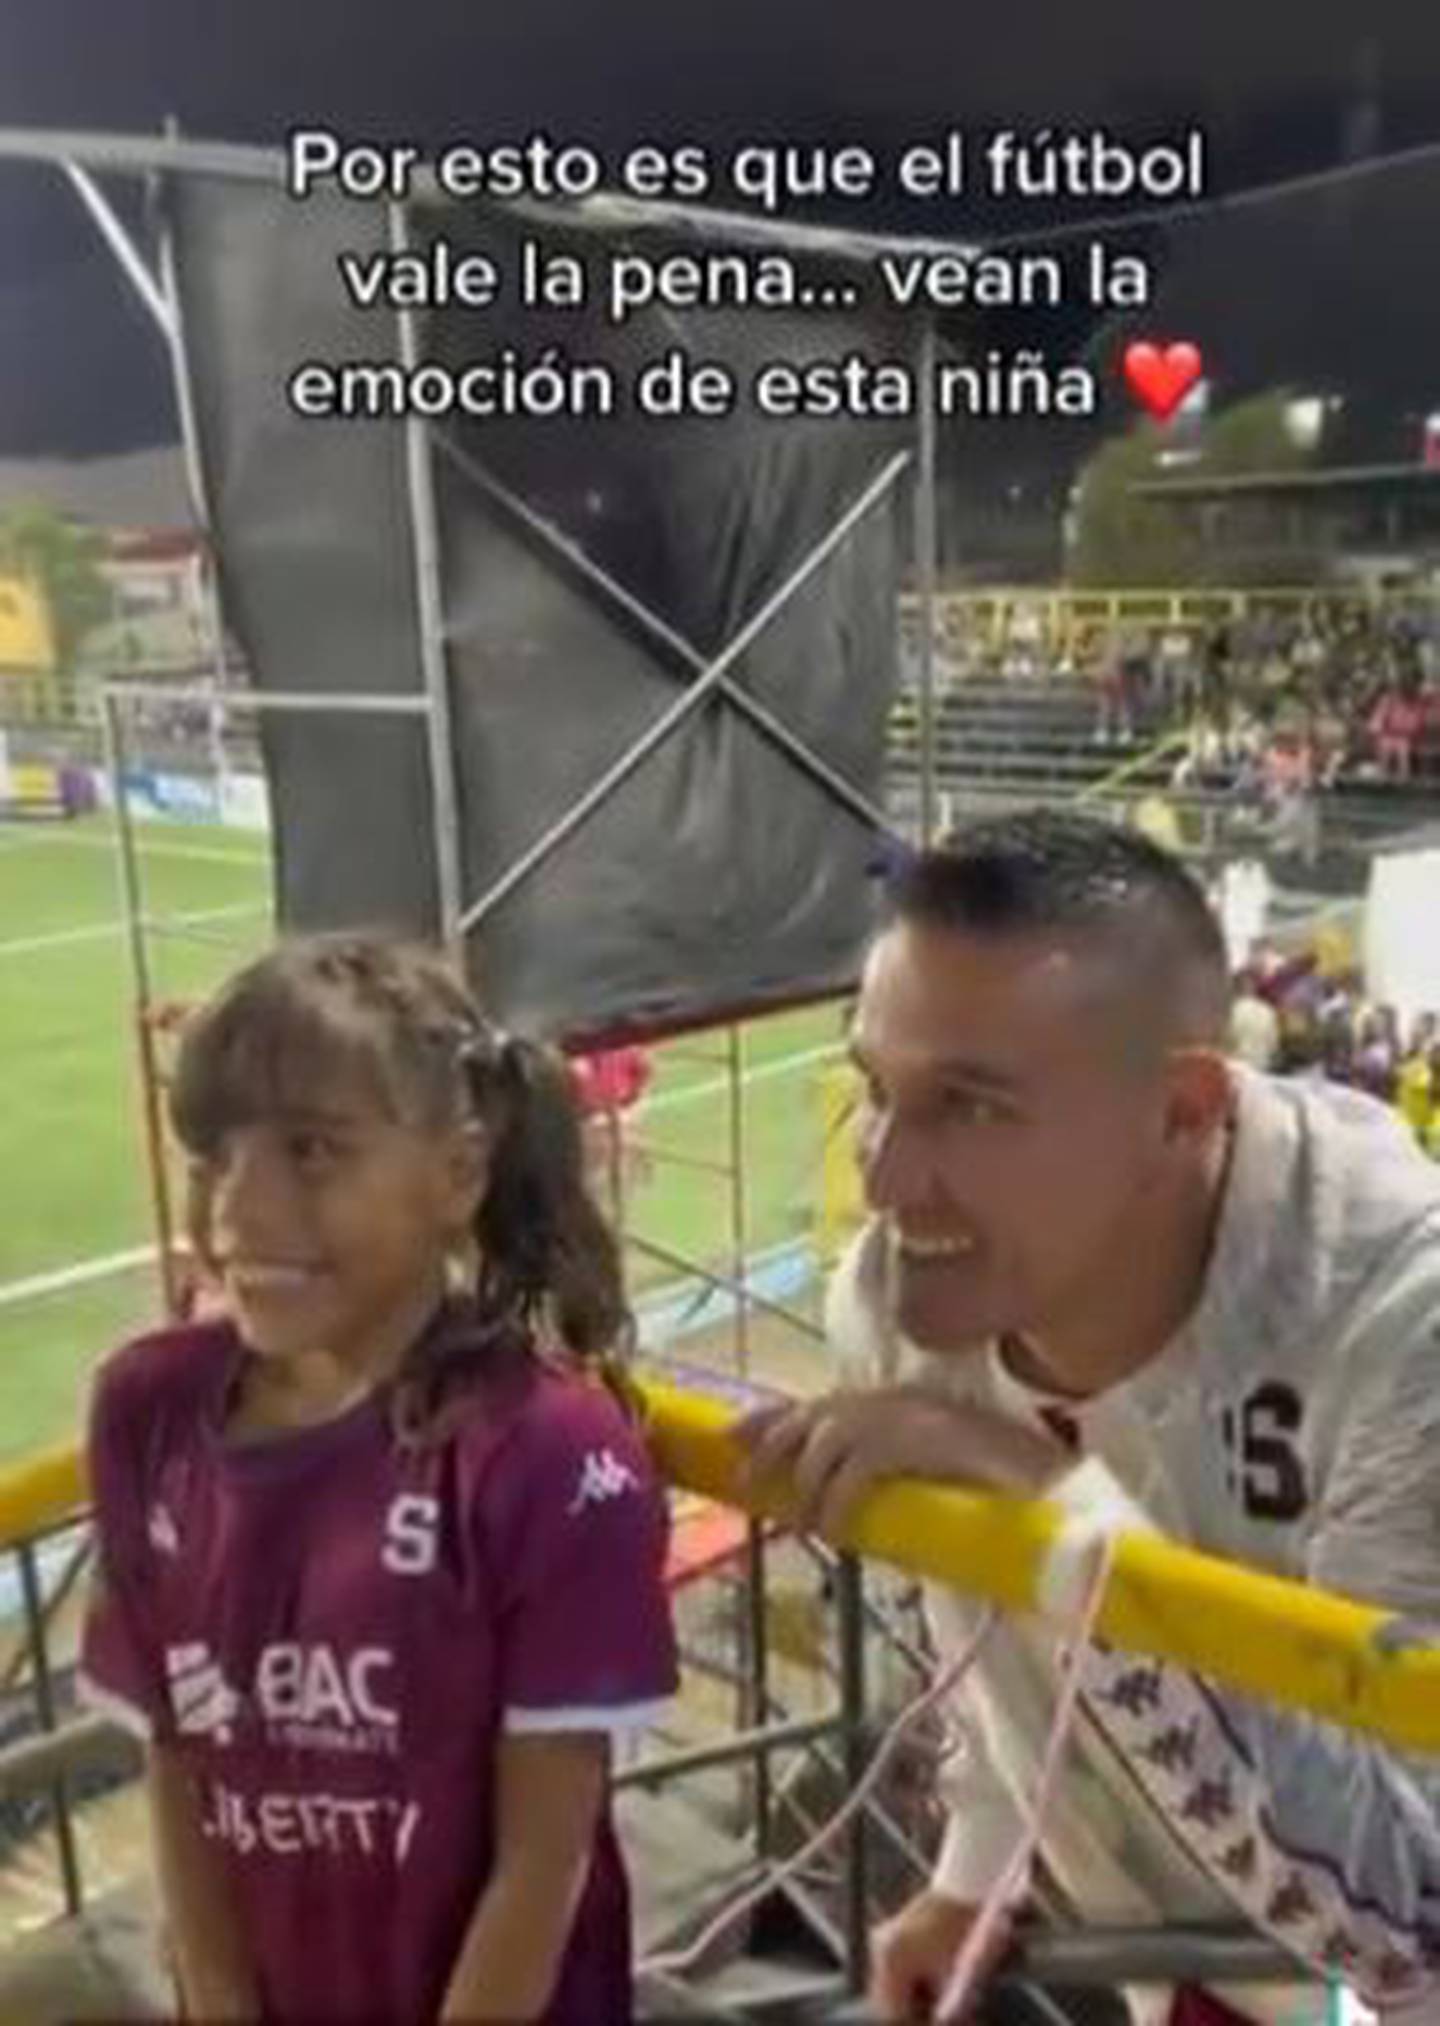 Alondra, la niña que conoció a jugadores del Saprissa, el domingo en el juego contra Guadalupe. Captura de pantalla.